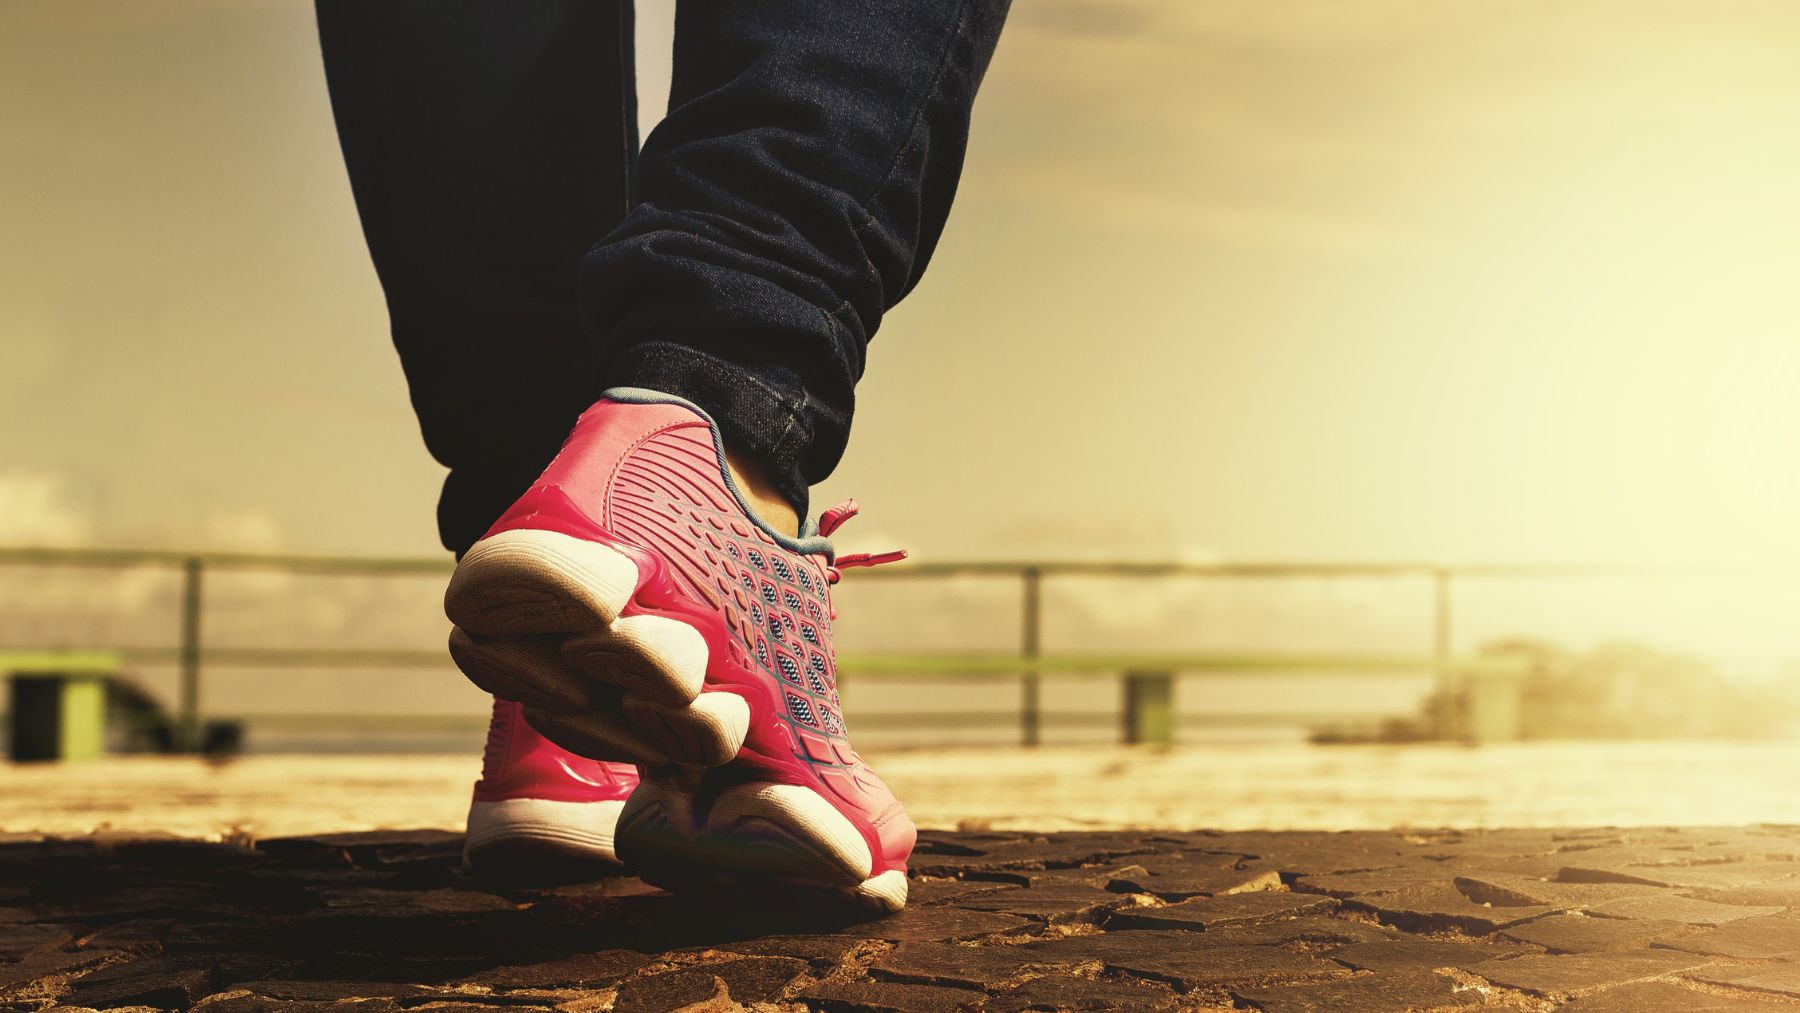 Andar 10.000 pasos a diario: beneficios saludables